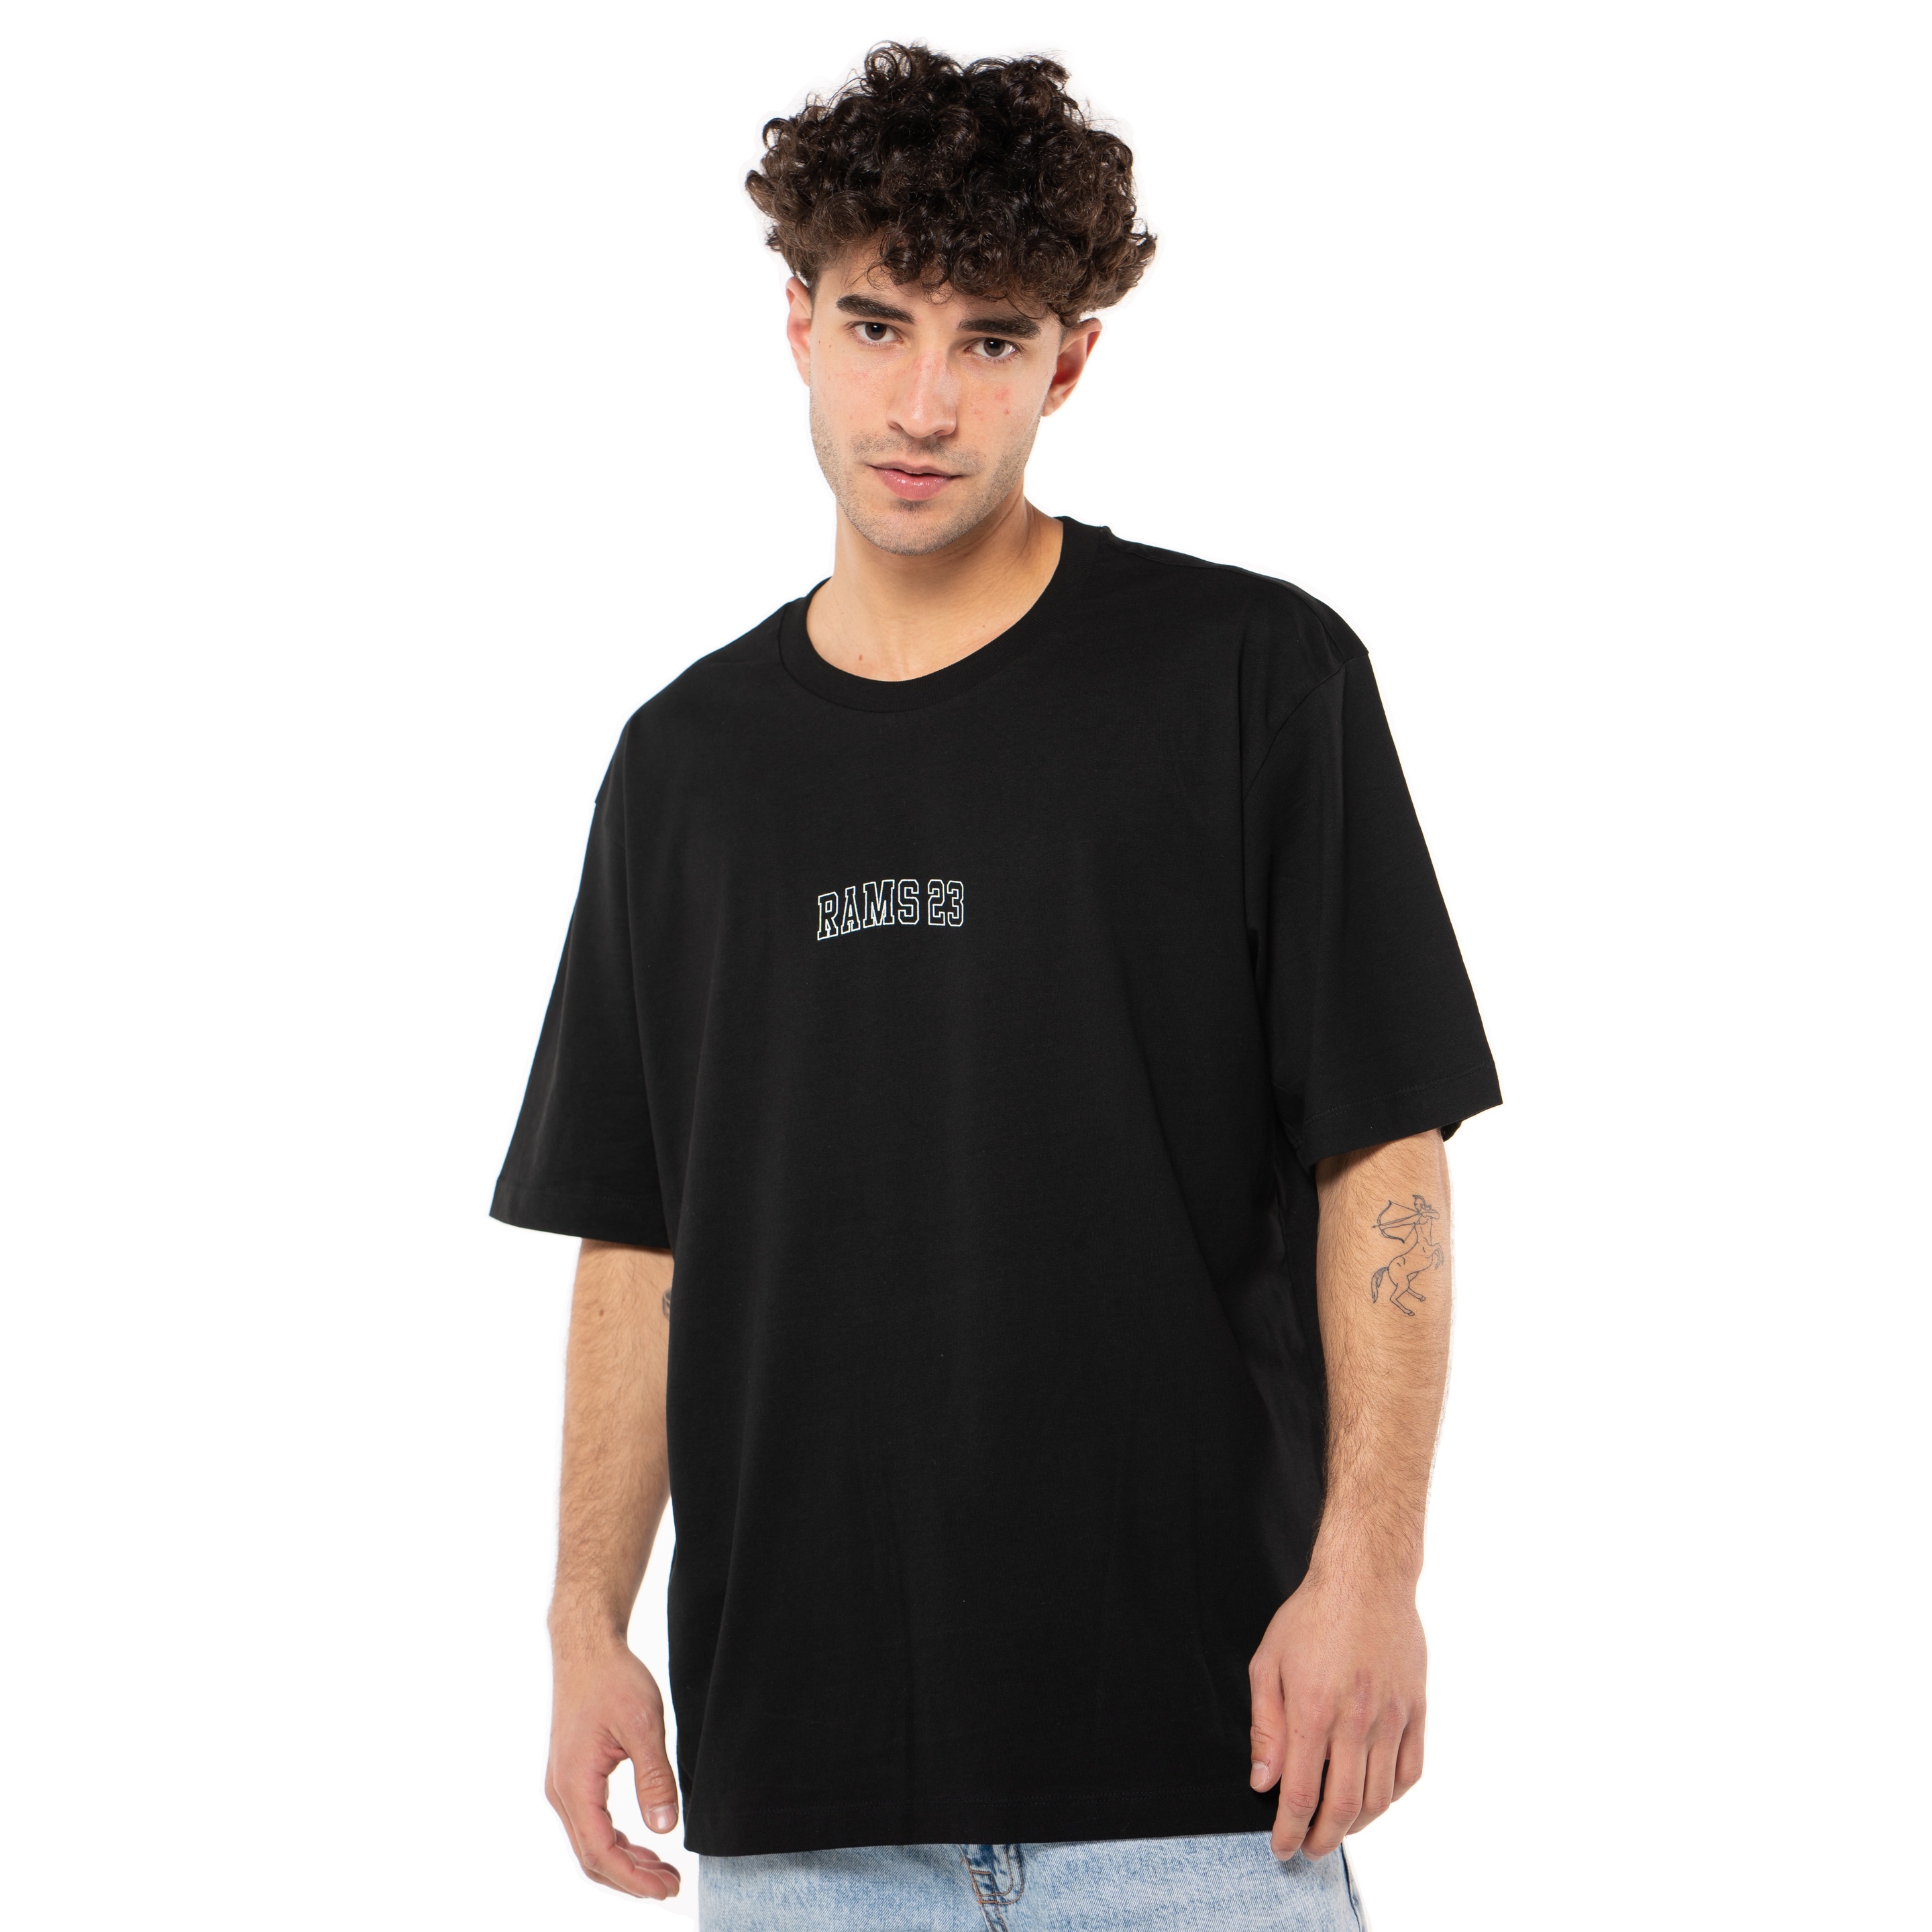 Camiseta Hip-hop Rams 23 - negro - 